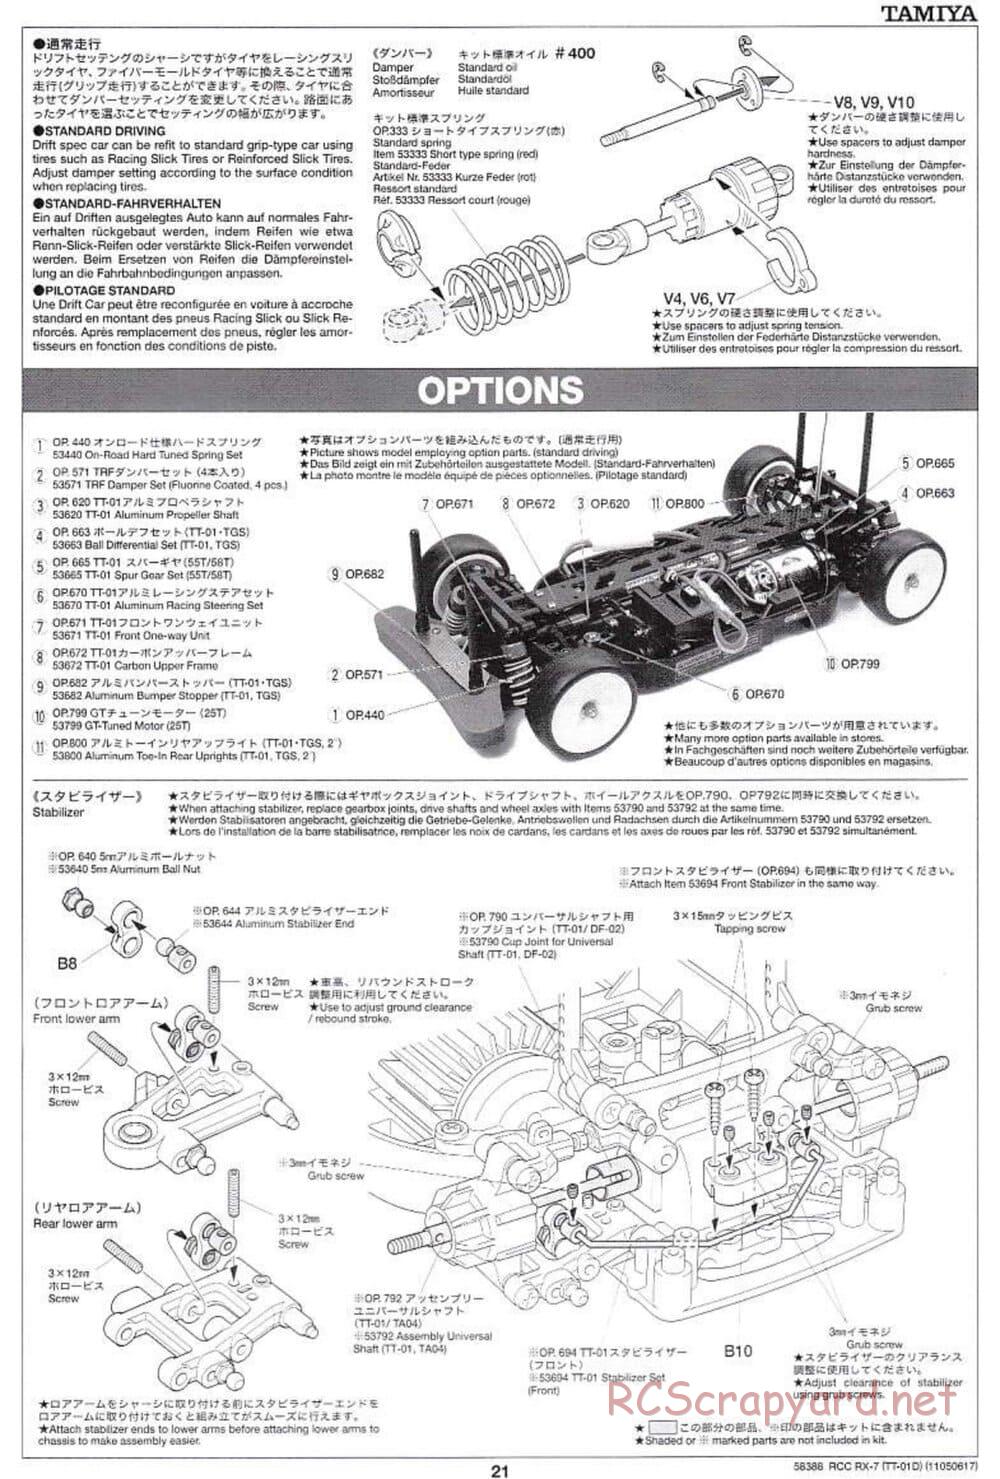 Tamiya - Mazda RX-7 - Drift Spec - TT-01D Chassis - Manual - Page 21